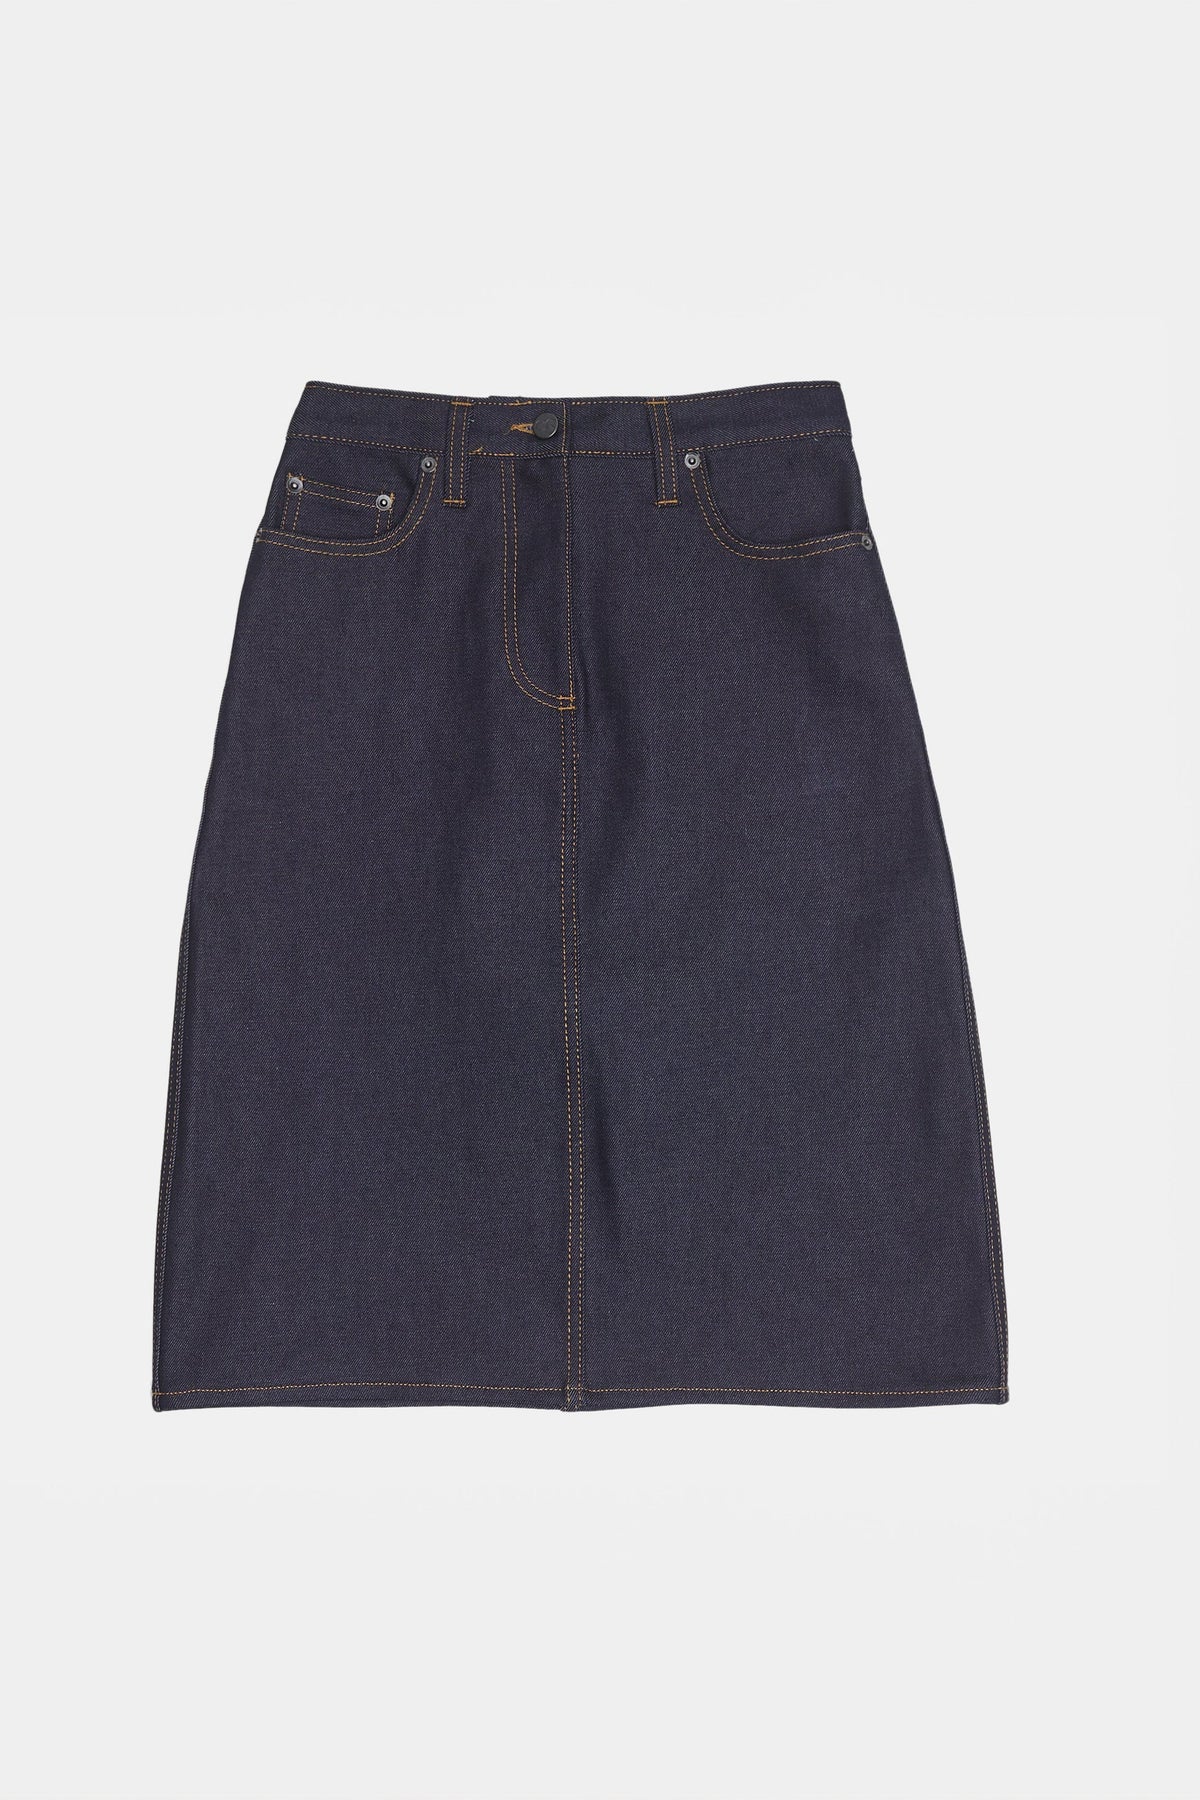 
            A flat lay shot of a knee length jean skirt in indigo denim